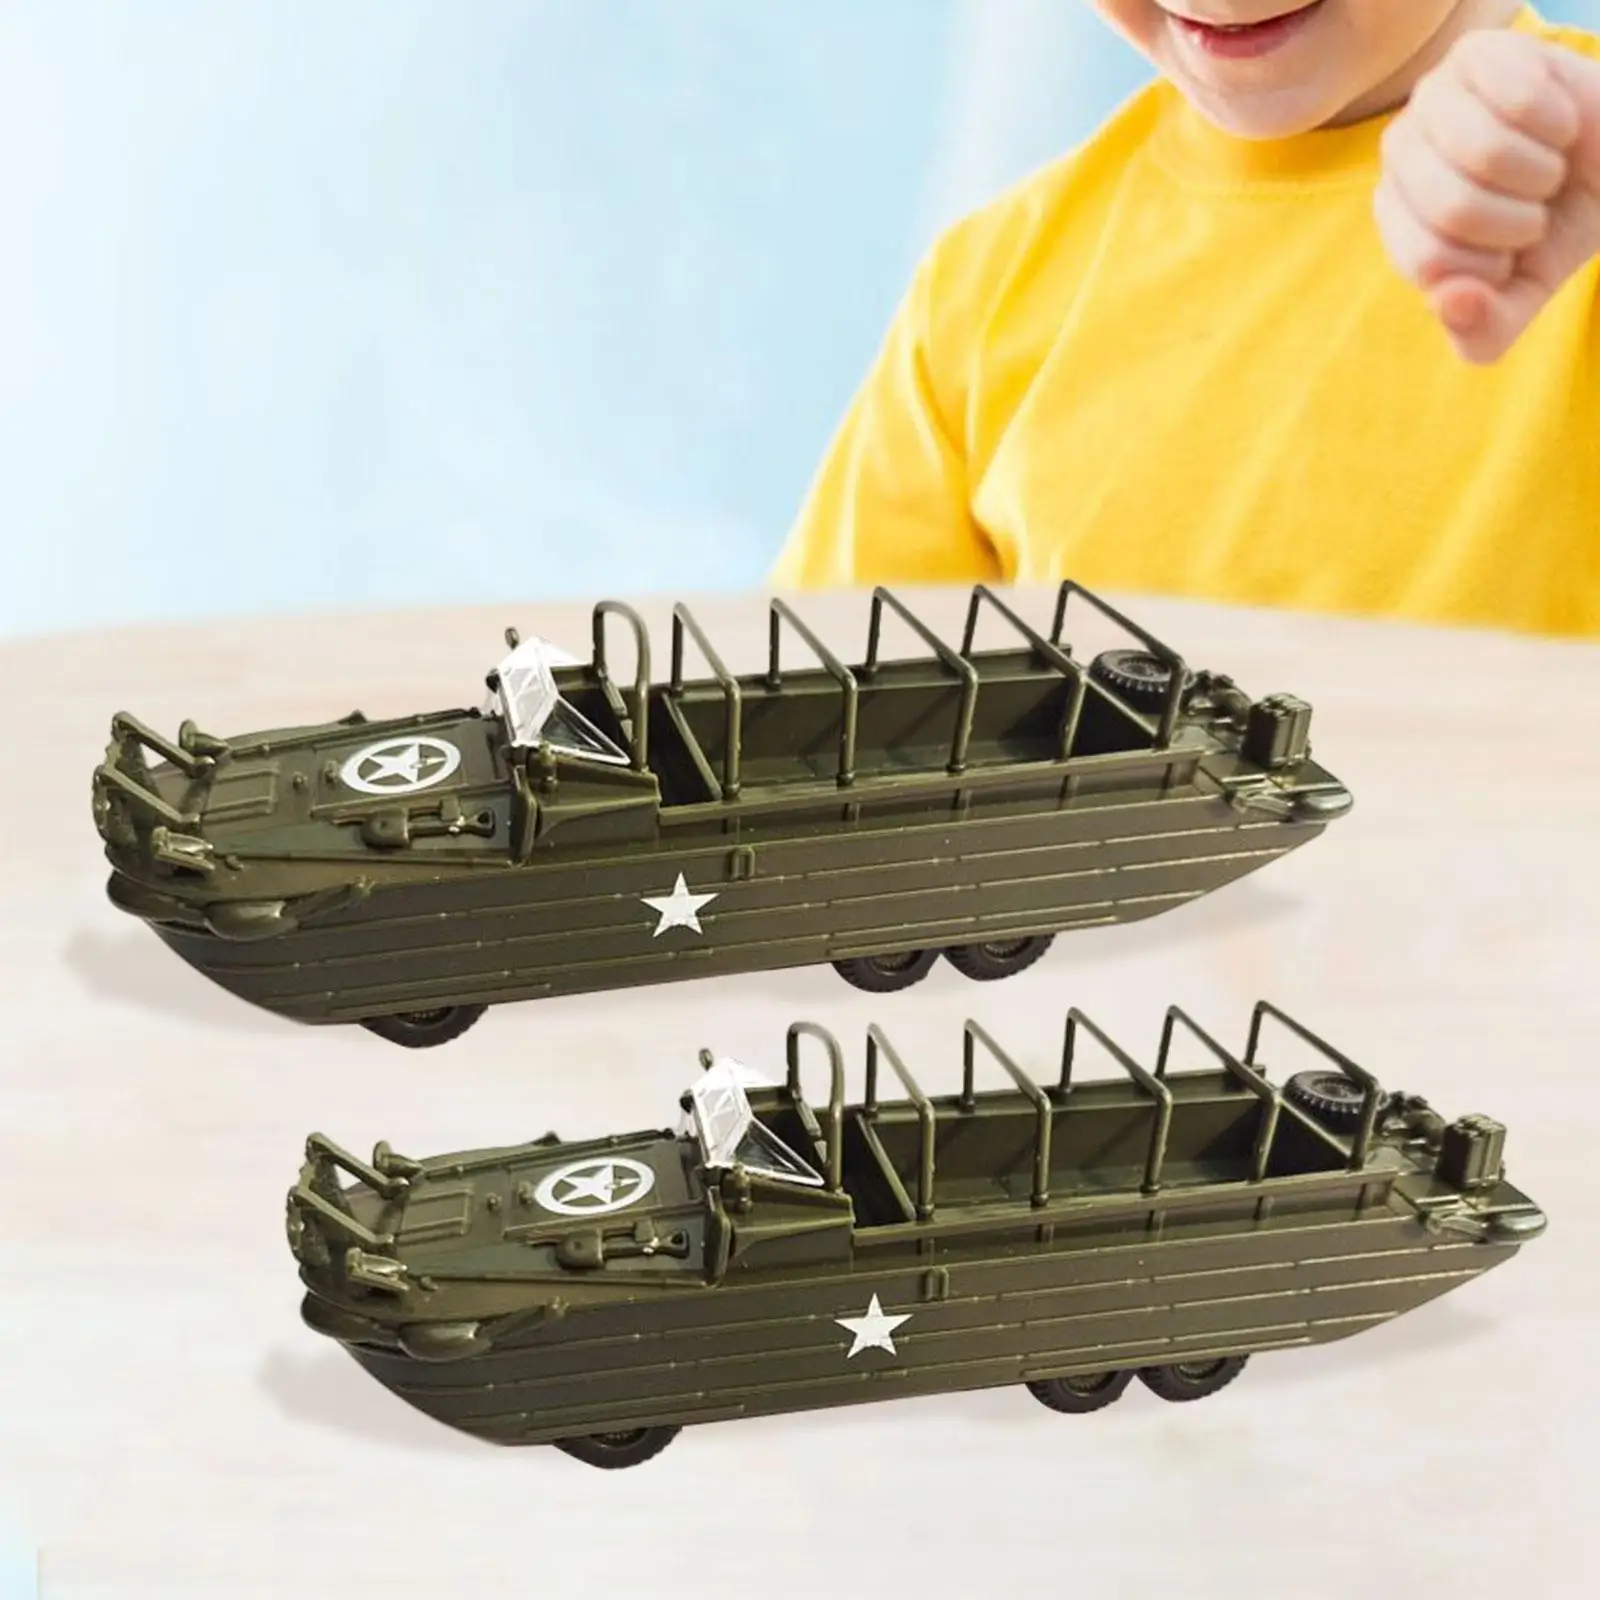 1/72 Amphibious Vehicle Model Kits, DIY Puzzle Truck Model, Sand Table Decor, 4D Model Toy for Adults Kids Boys Girls